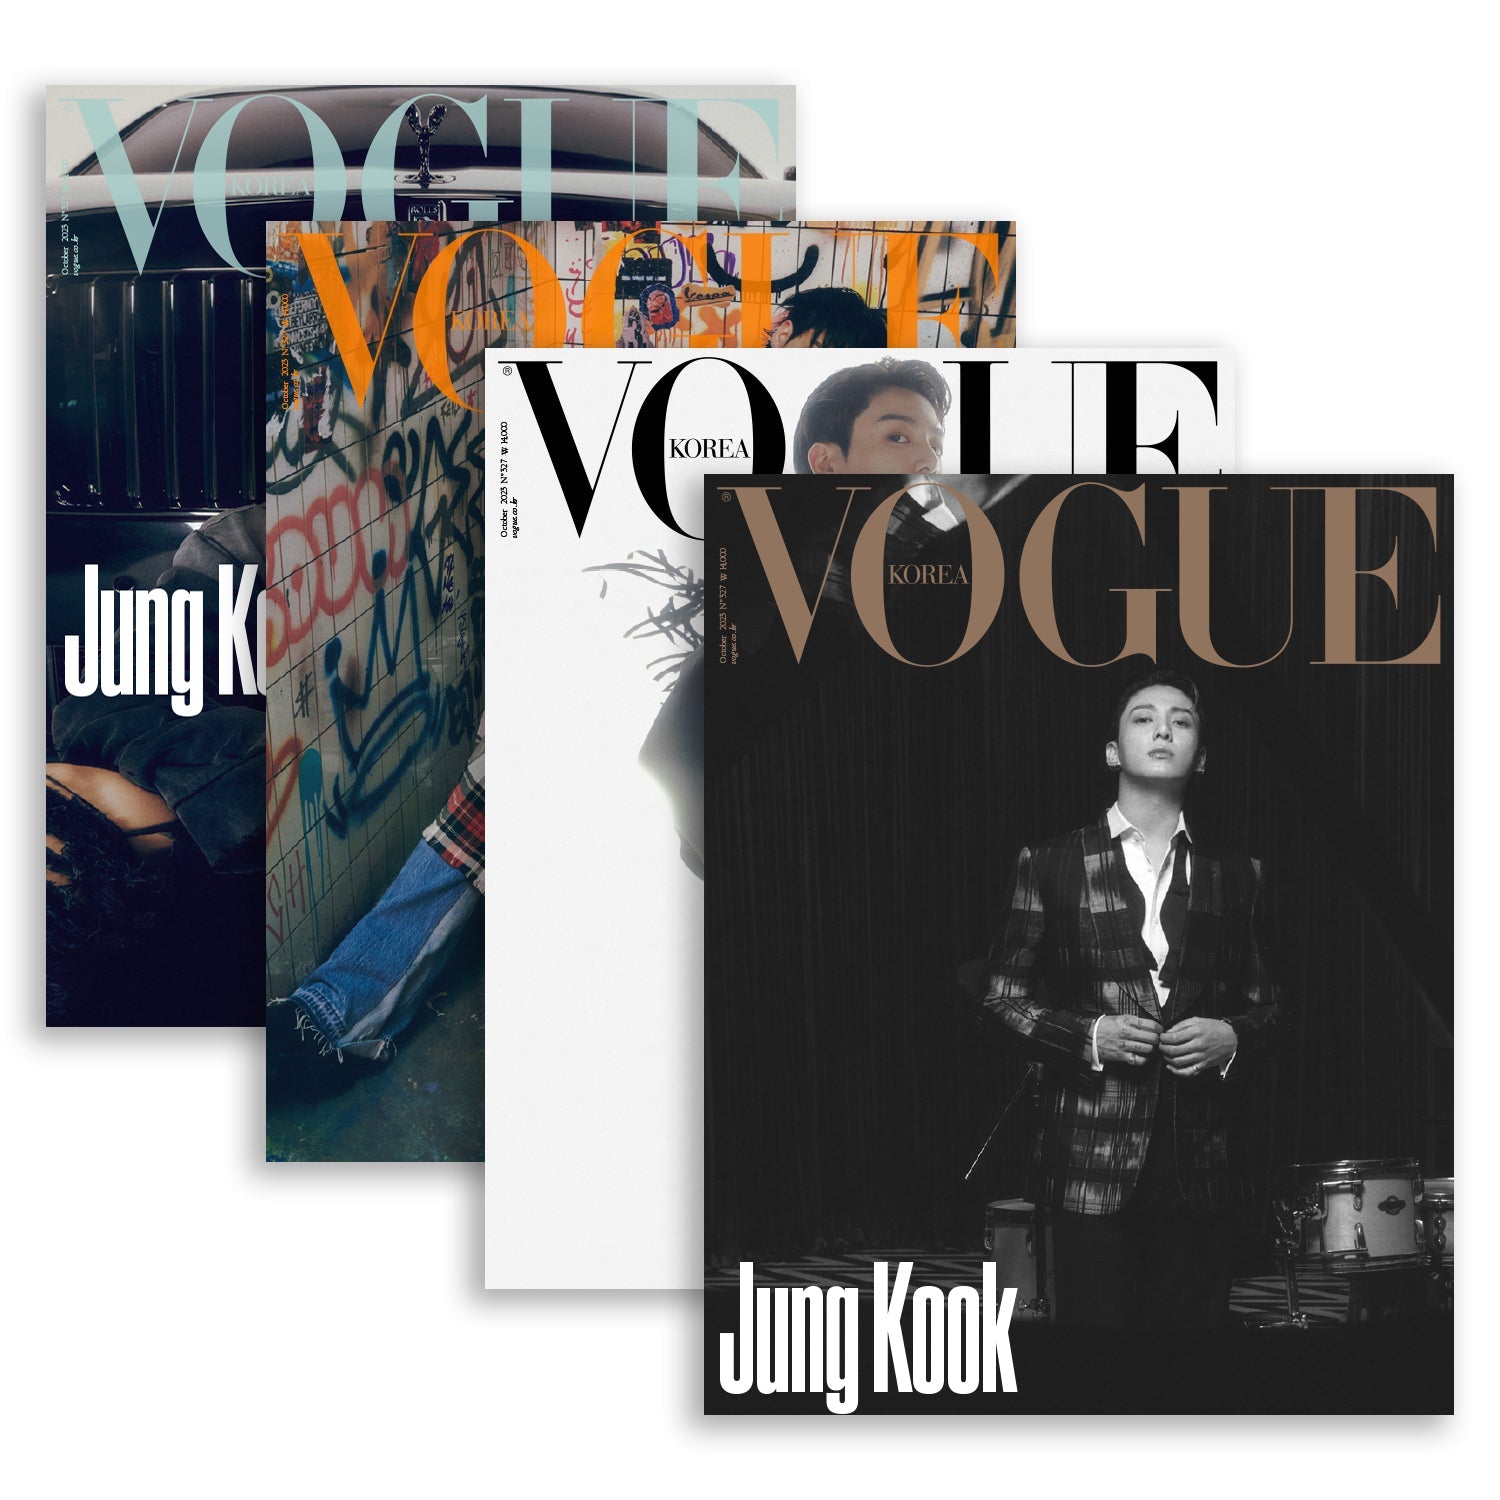 VOGUE Korea Magazine October 2023 Issue BTS JUNGKOOK Cover (D)